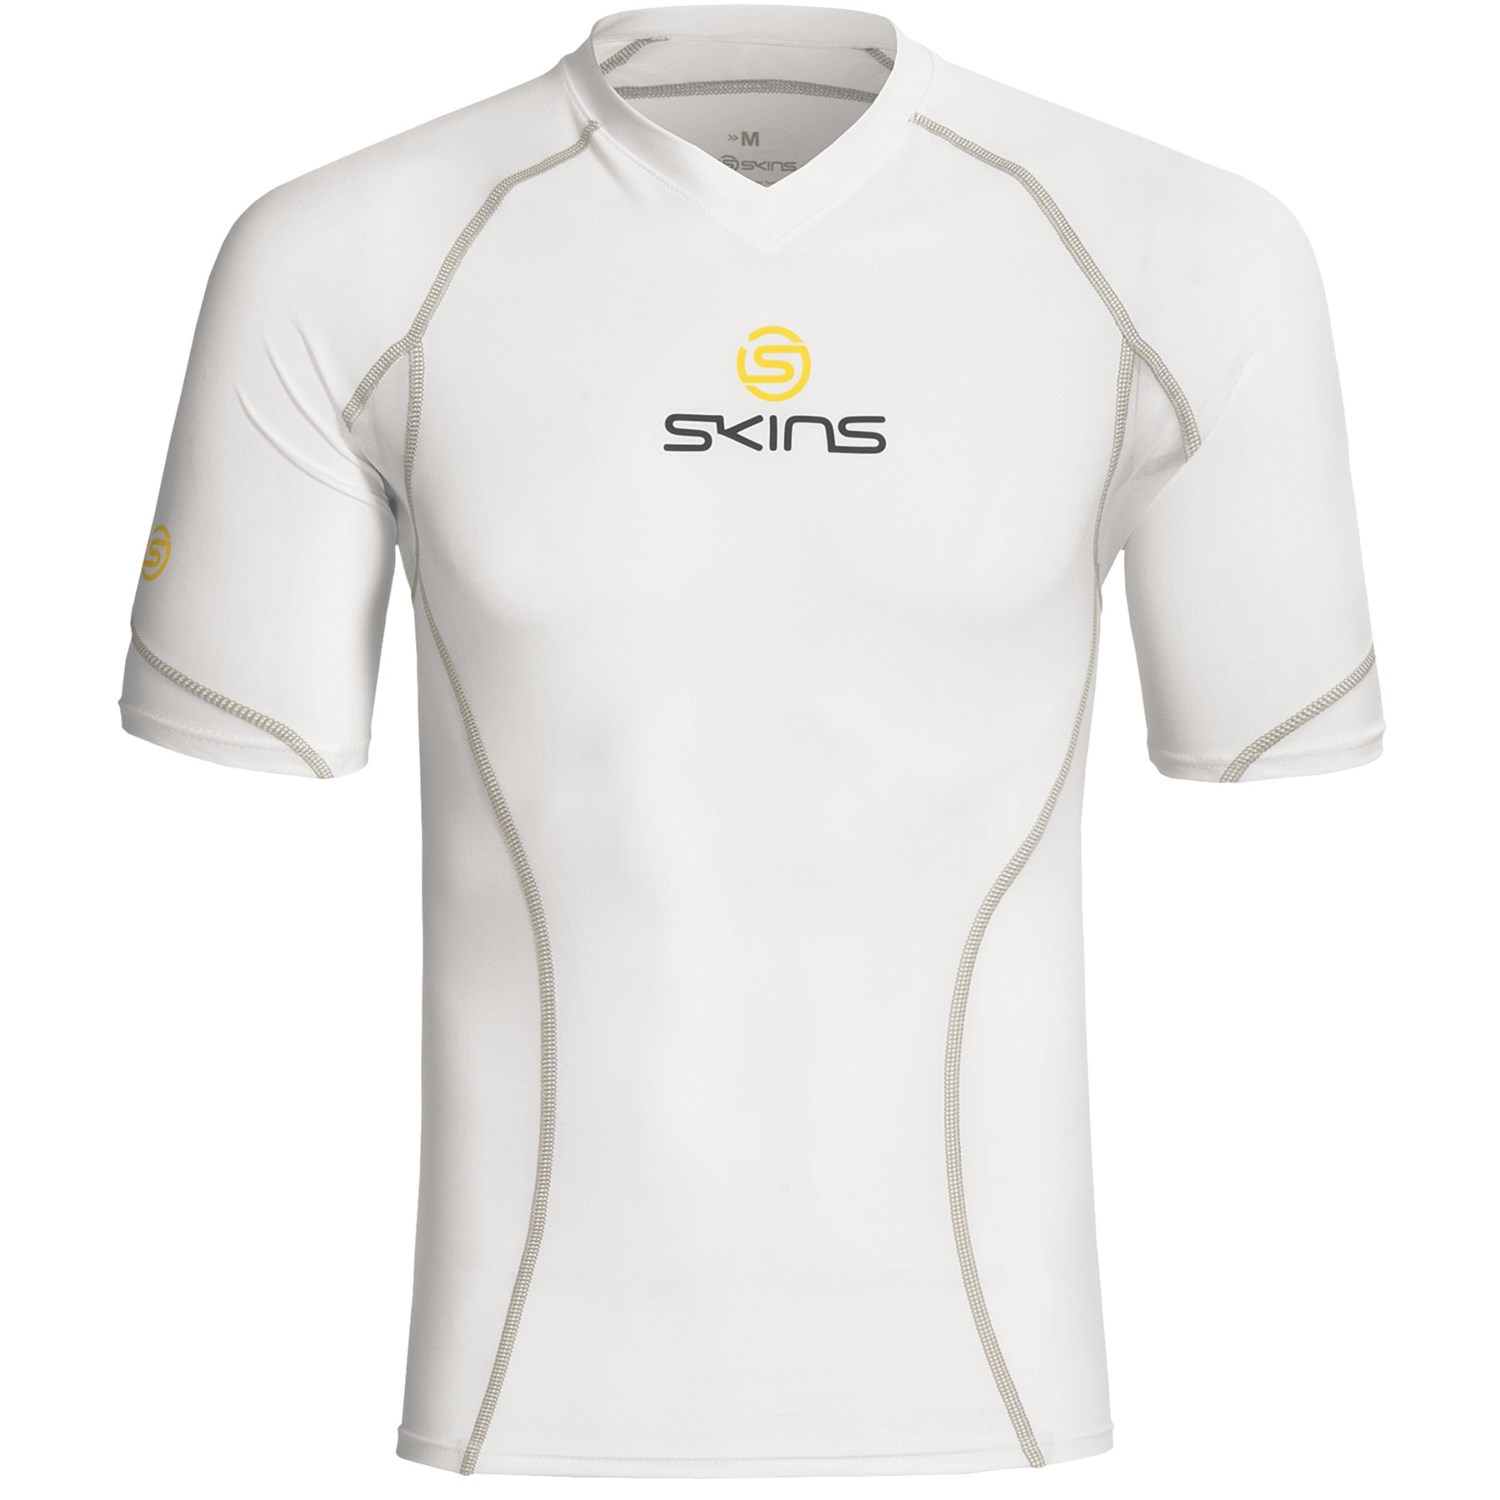 Skins Sport Men's Compression Top Short-sleeve White w/ Gray Stitching XXL